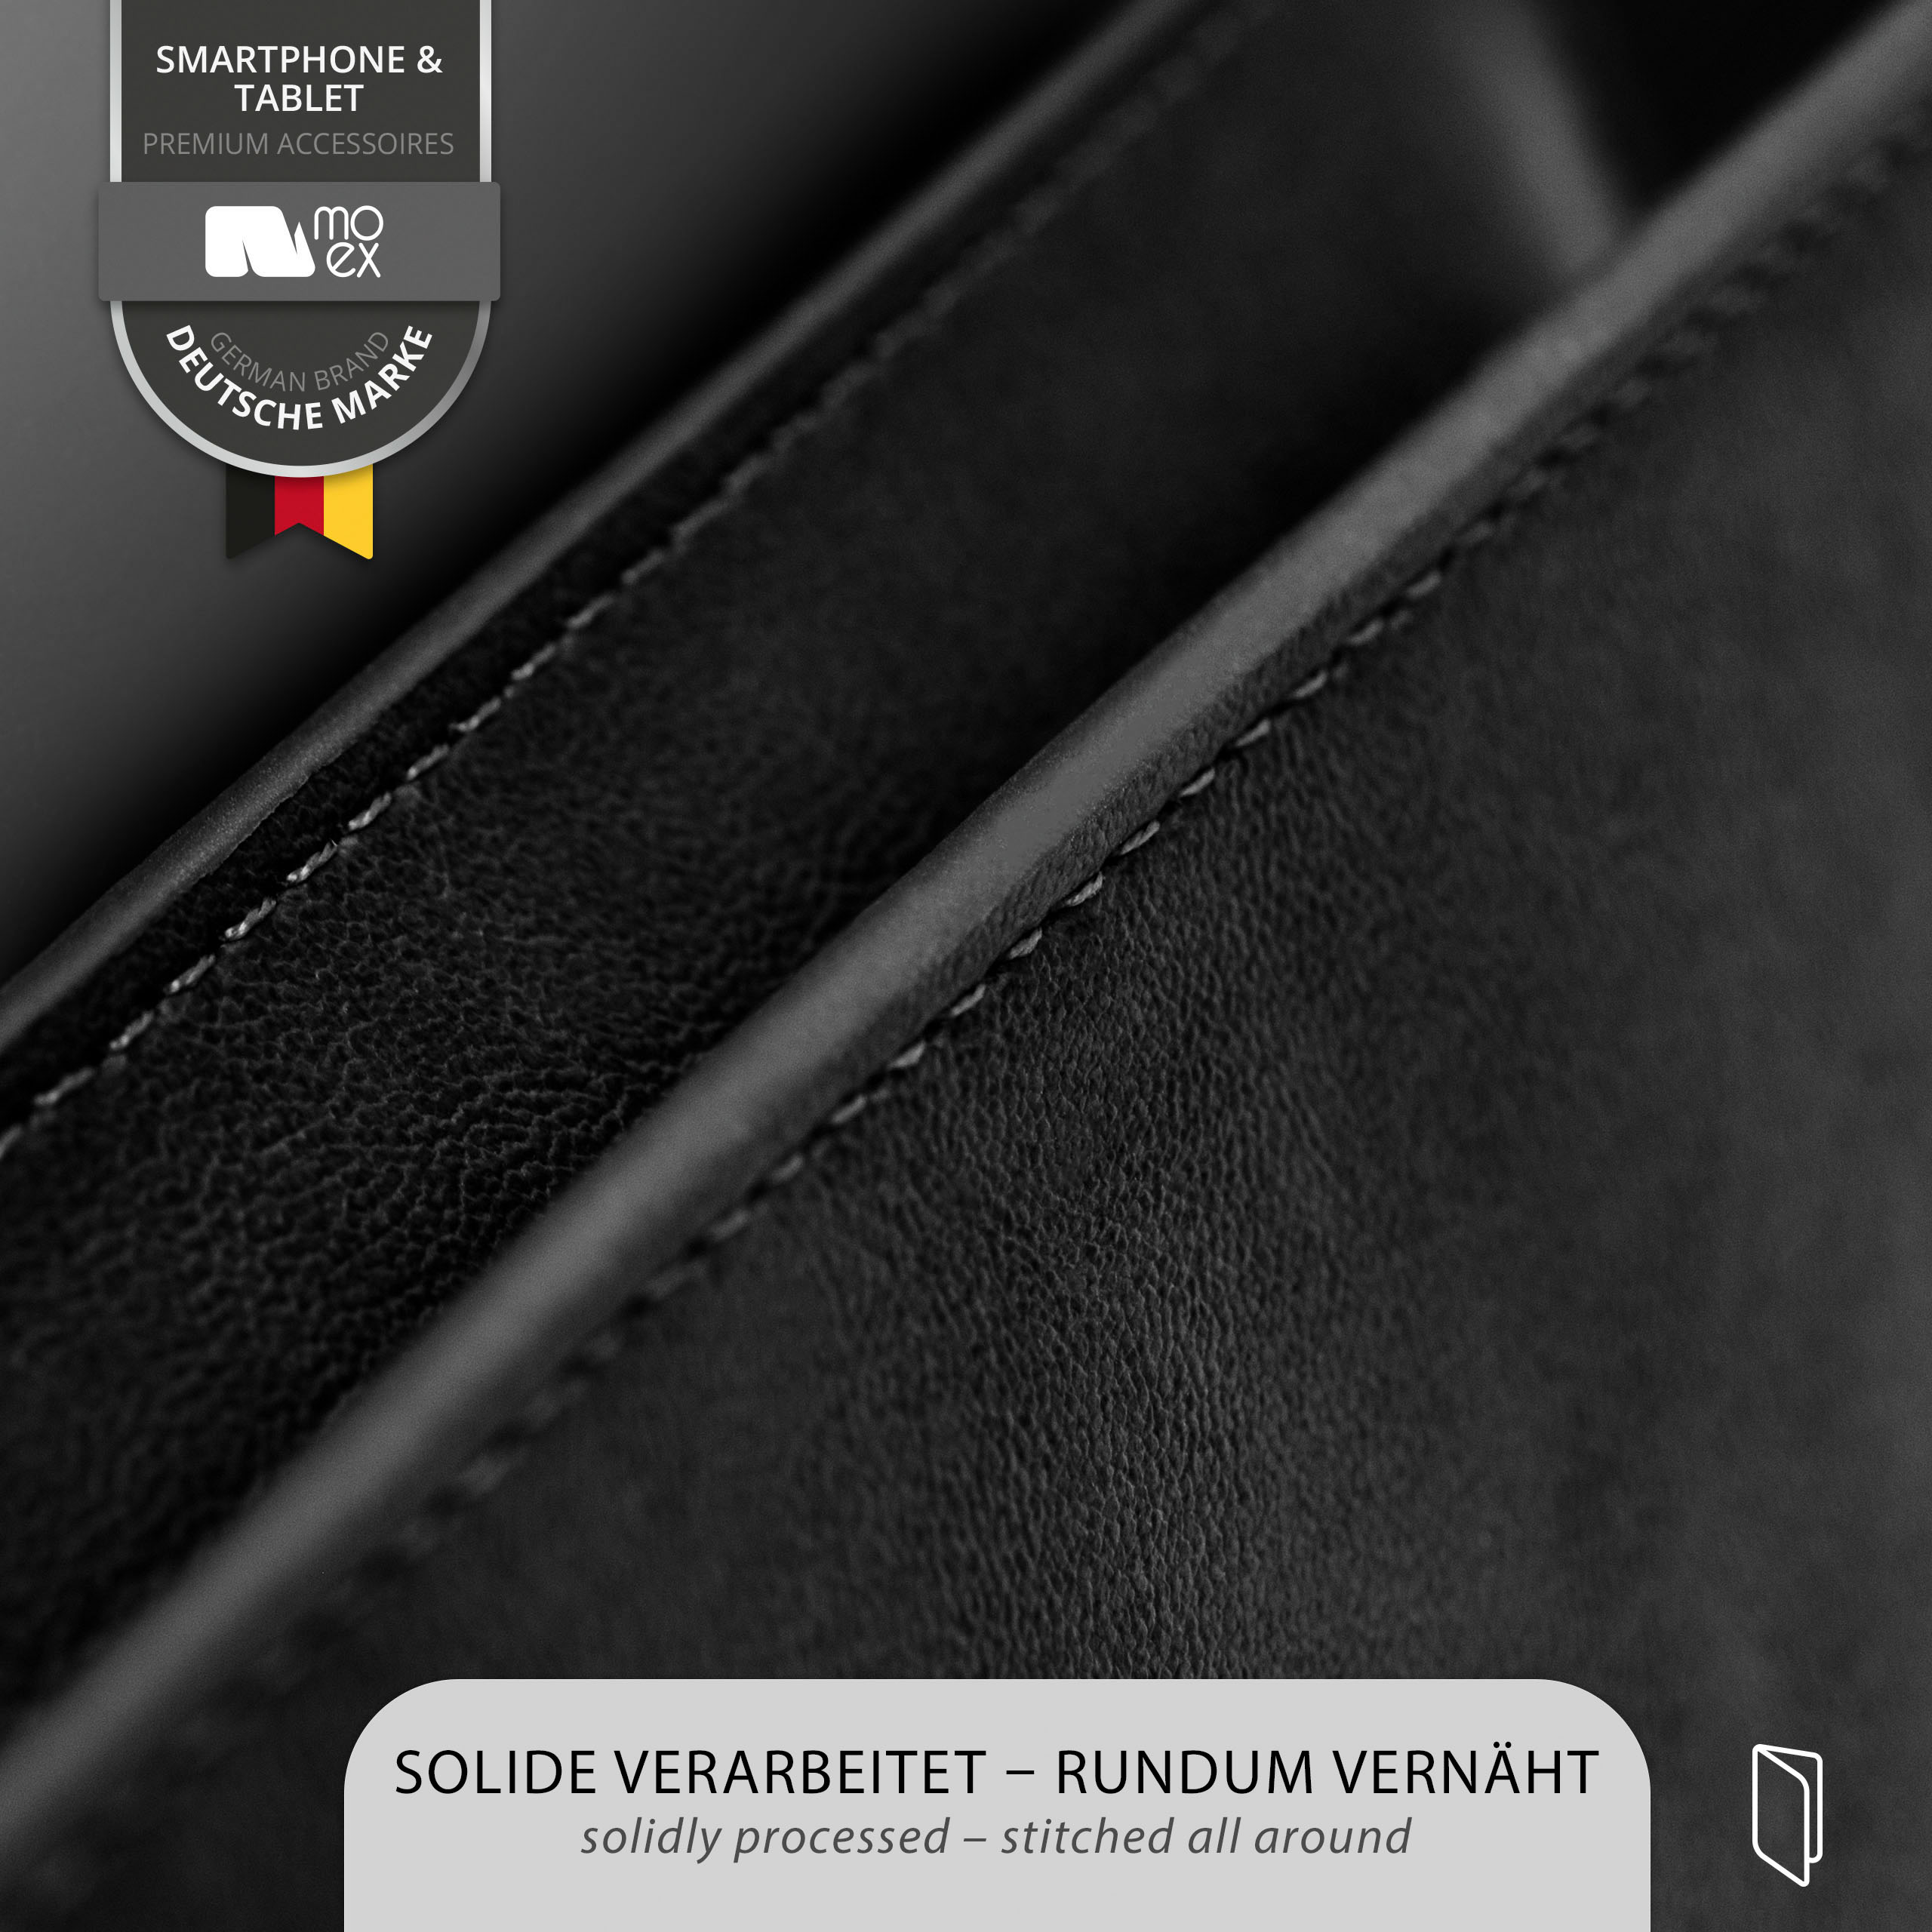 Schwarz Lumia Flip Case, Cover, Microsoft, 950, MOEX Purse